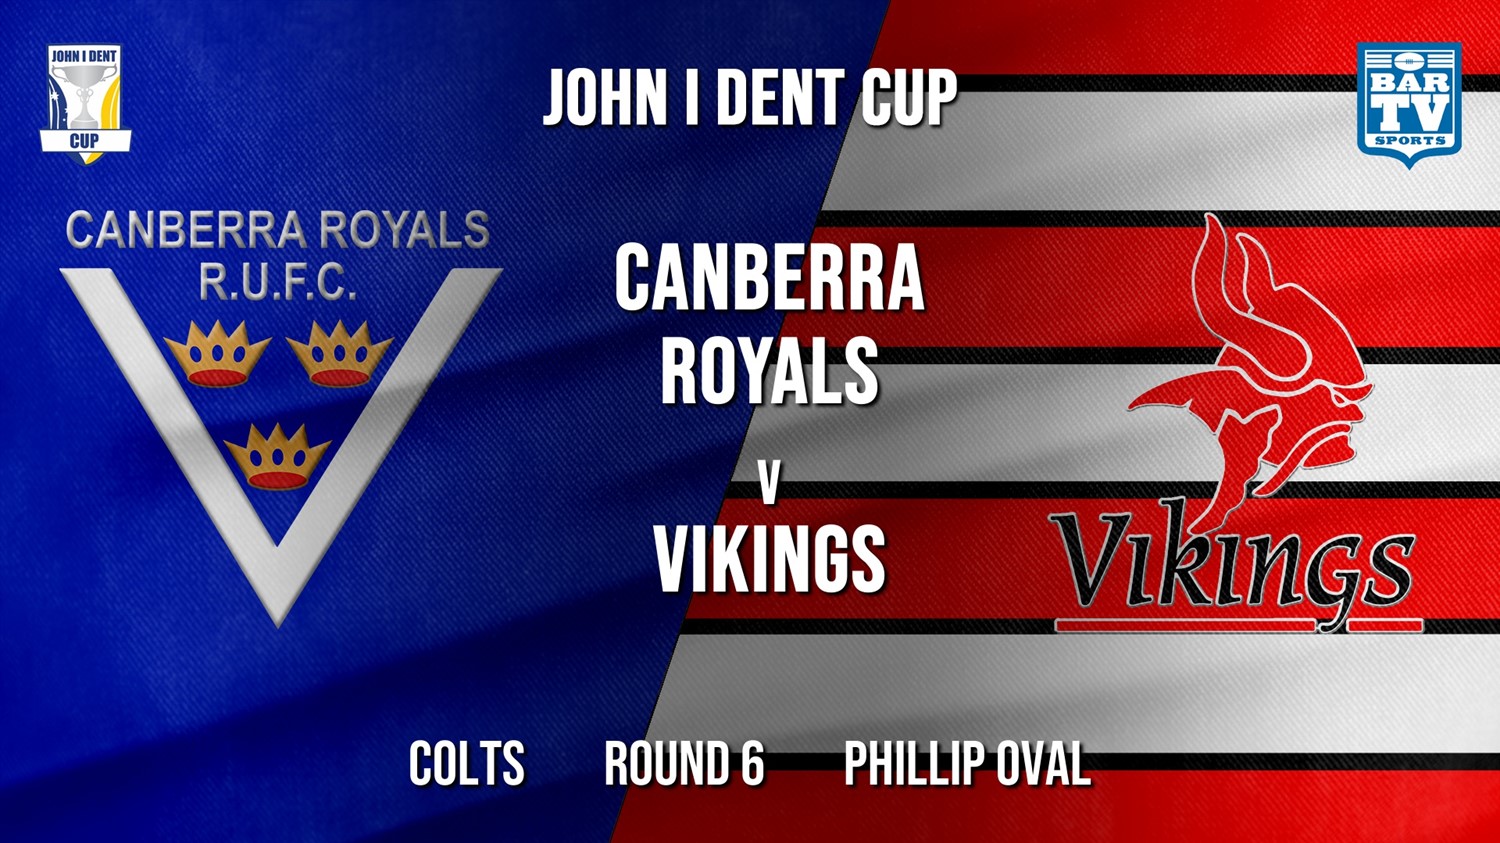 John I Dent Round 6 - Colts - Canberra Royals v Tuggeranong Vikings Minigame Slate Image